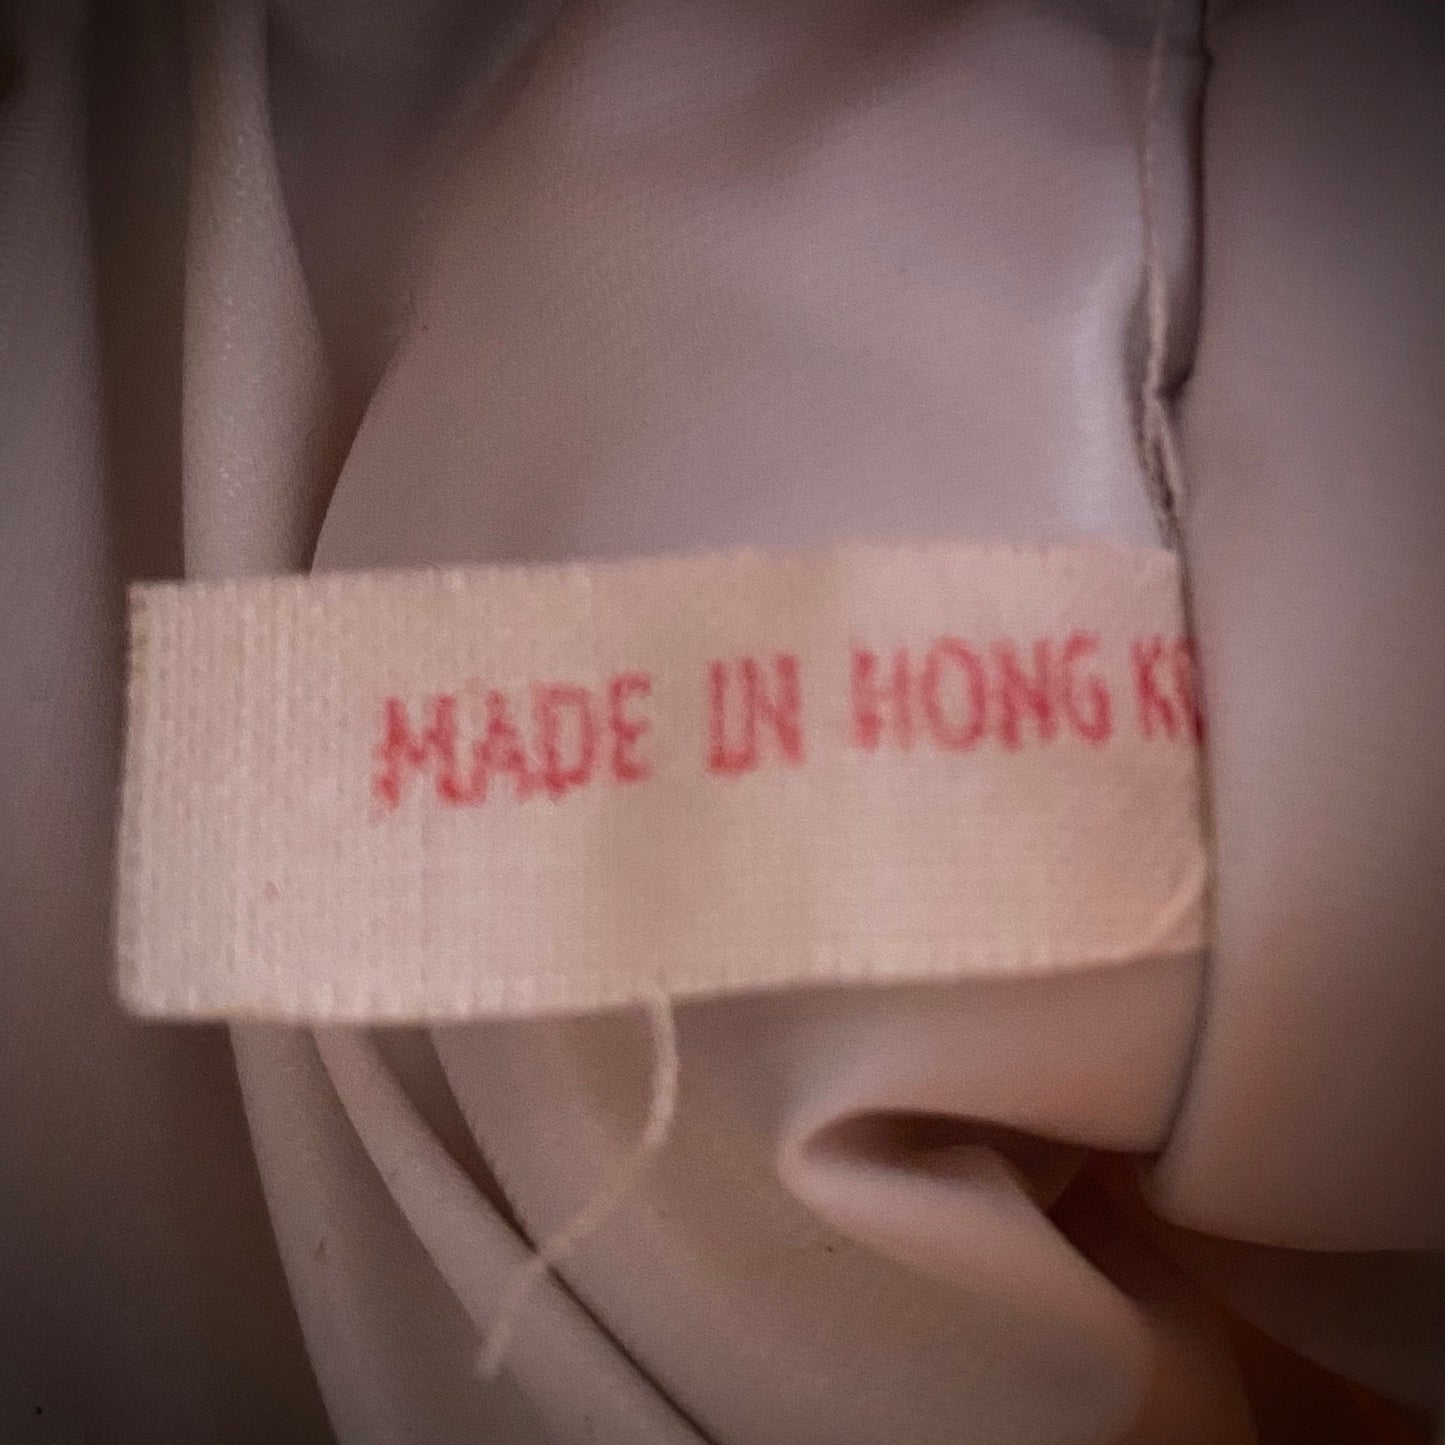 purse made in hong kong